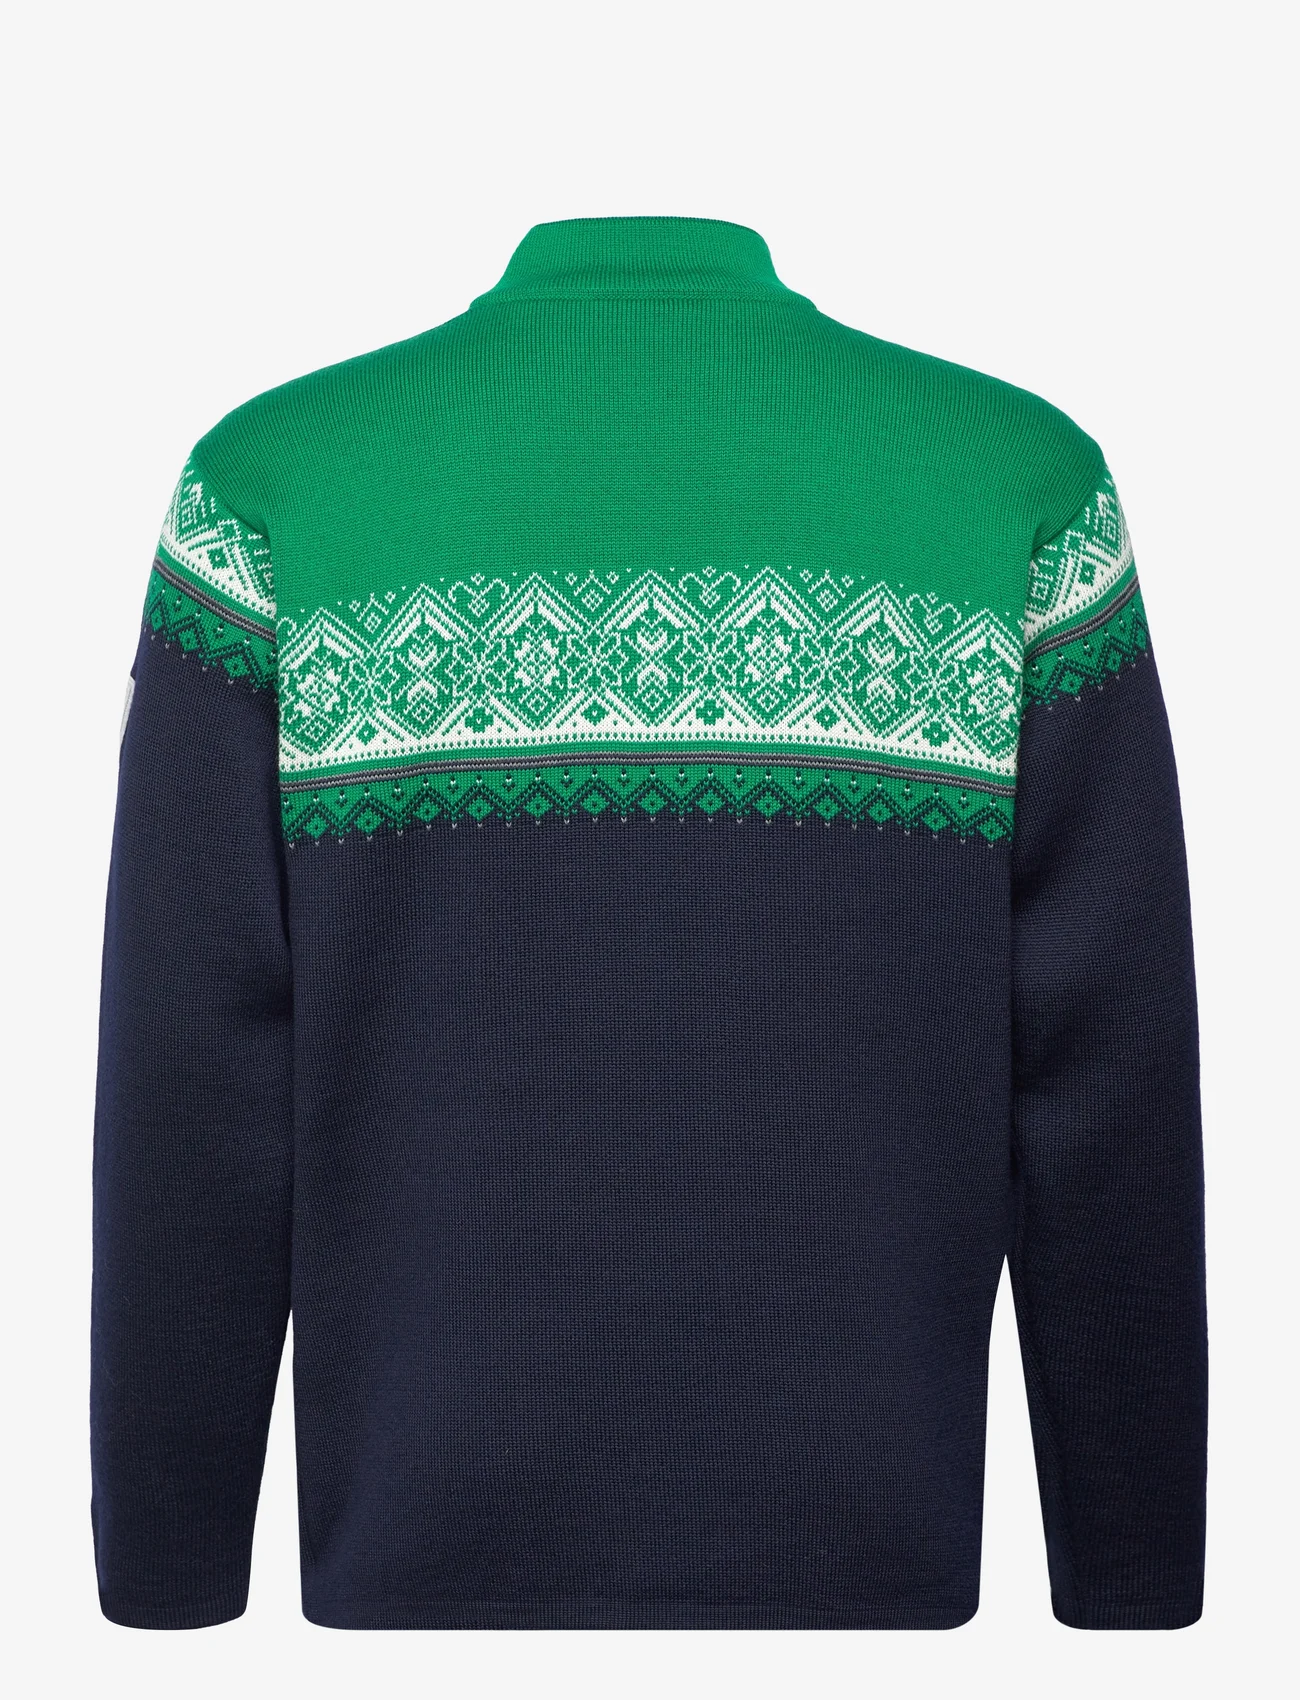 Dale of Norway - Moritz Masc Sweater - tõmblukk-kaelusega dressipluusid - c02 - 1